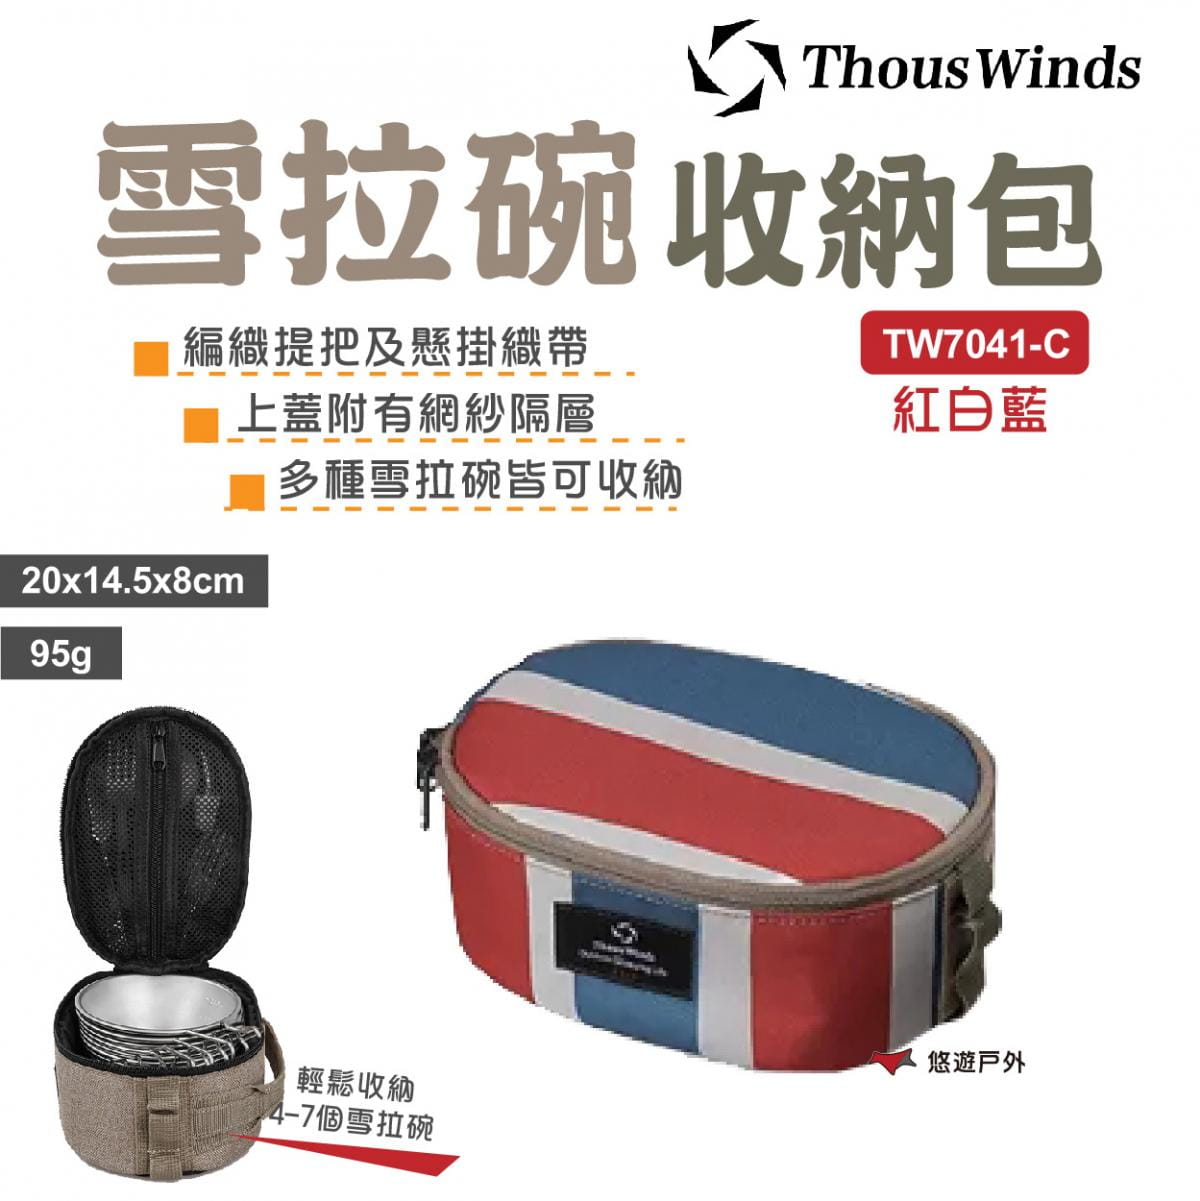 【Thous Winds】雪拉碗收納包 TW7041-C 紅白藍色 (悠遊戶外) 0